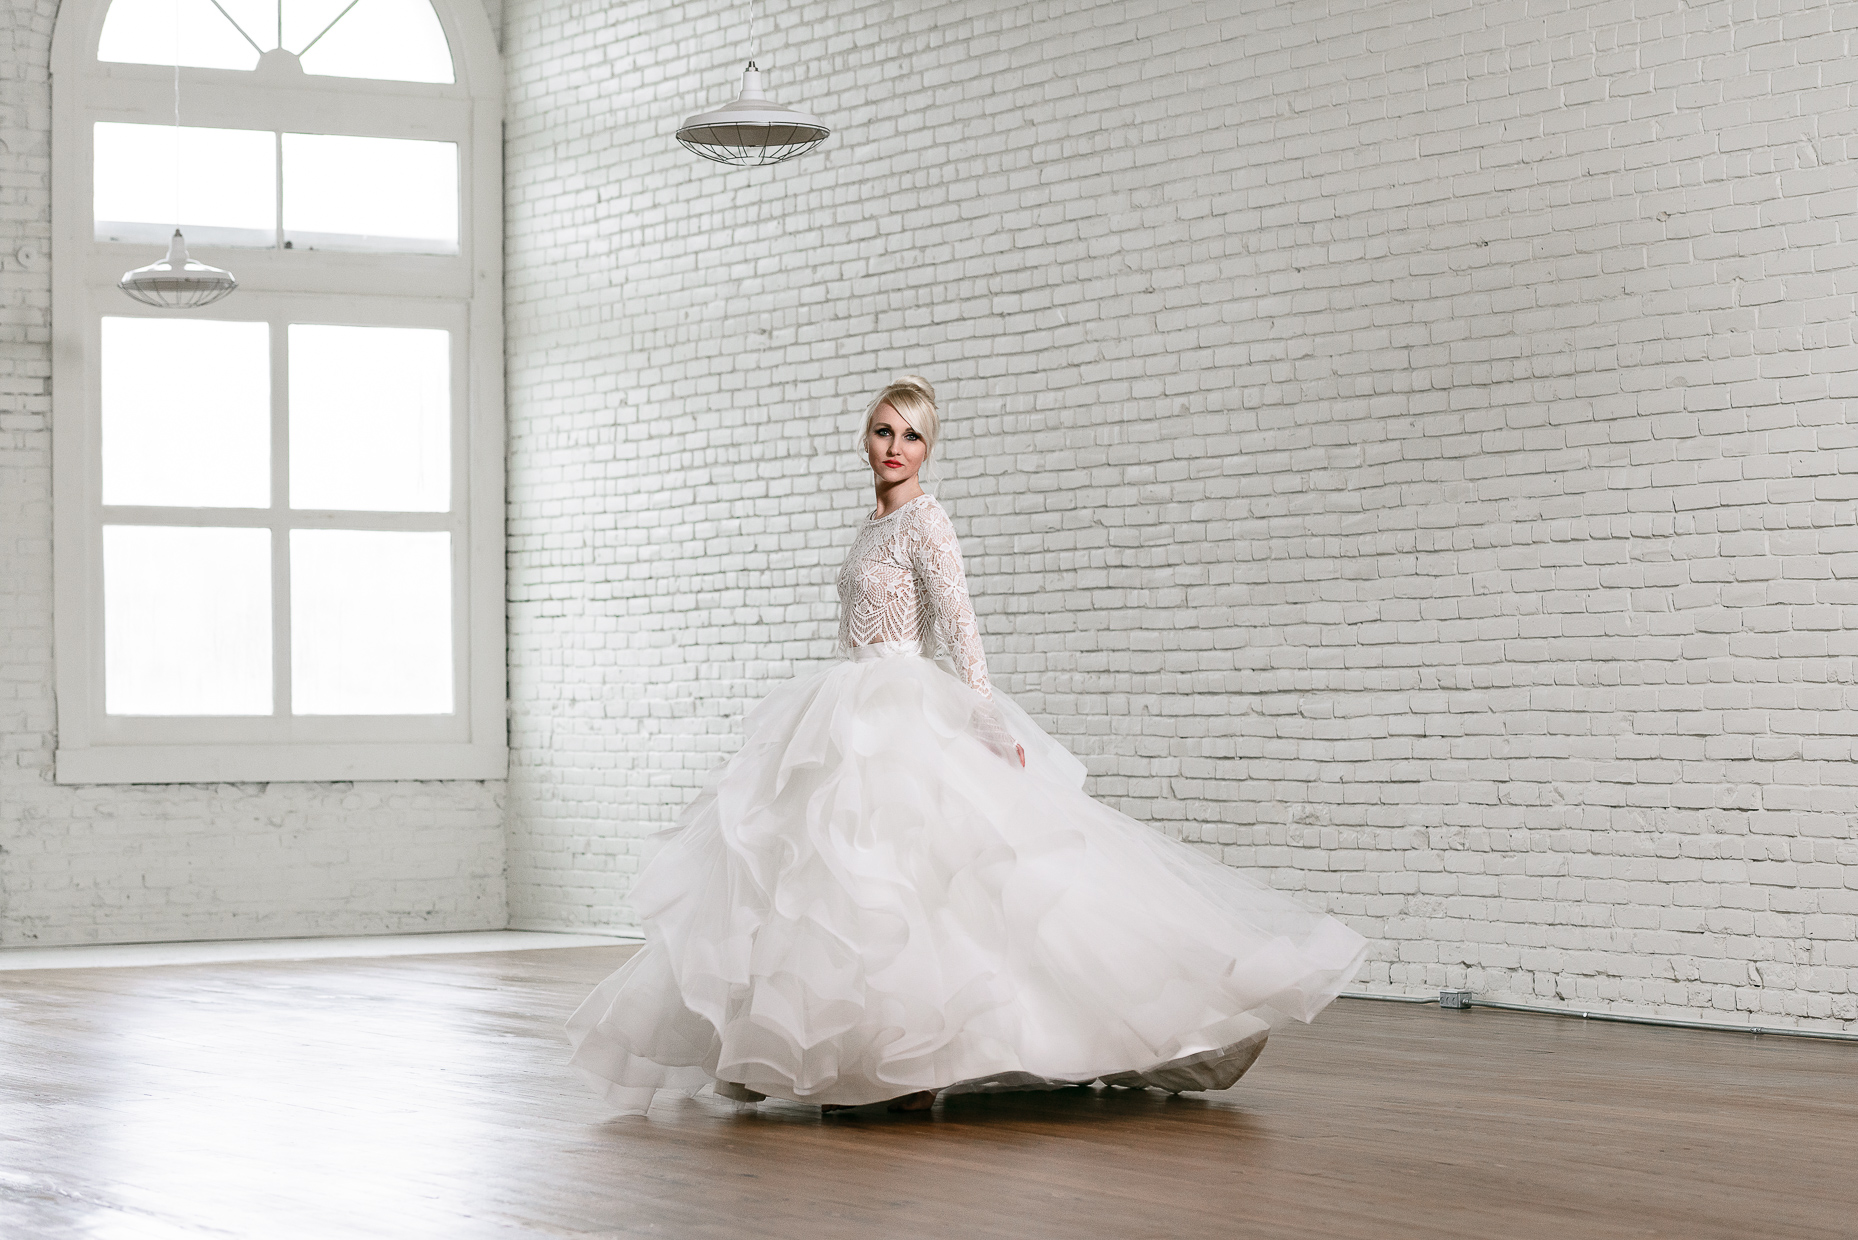 bride-modern-wedding-dress-portrait-beautiful-brick-light-airy